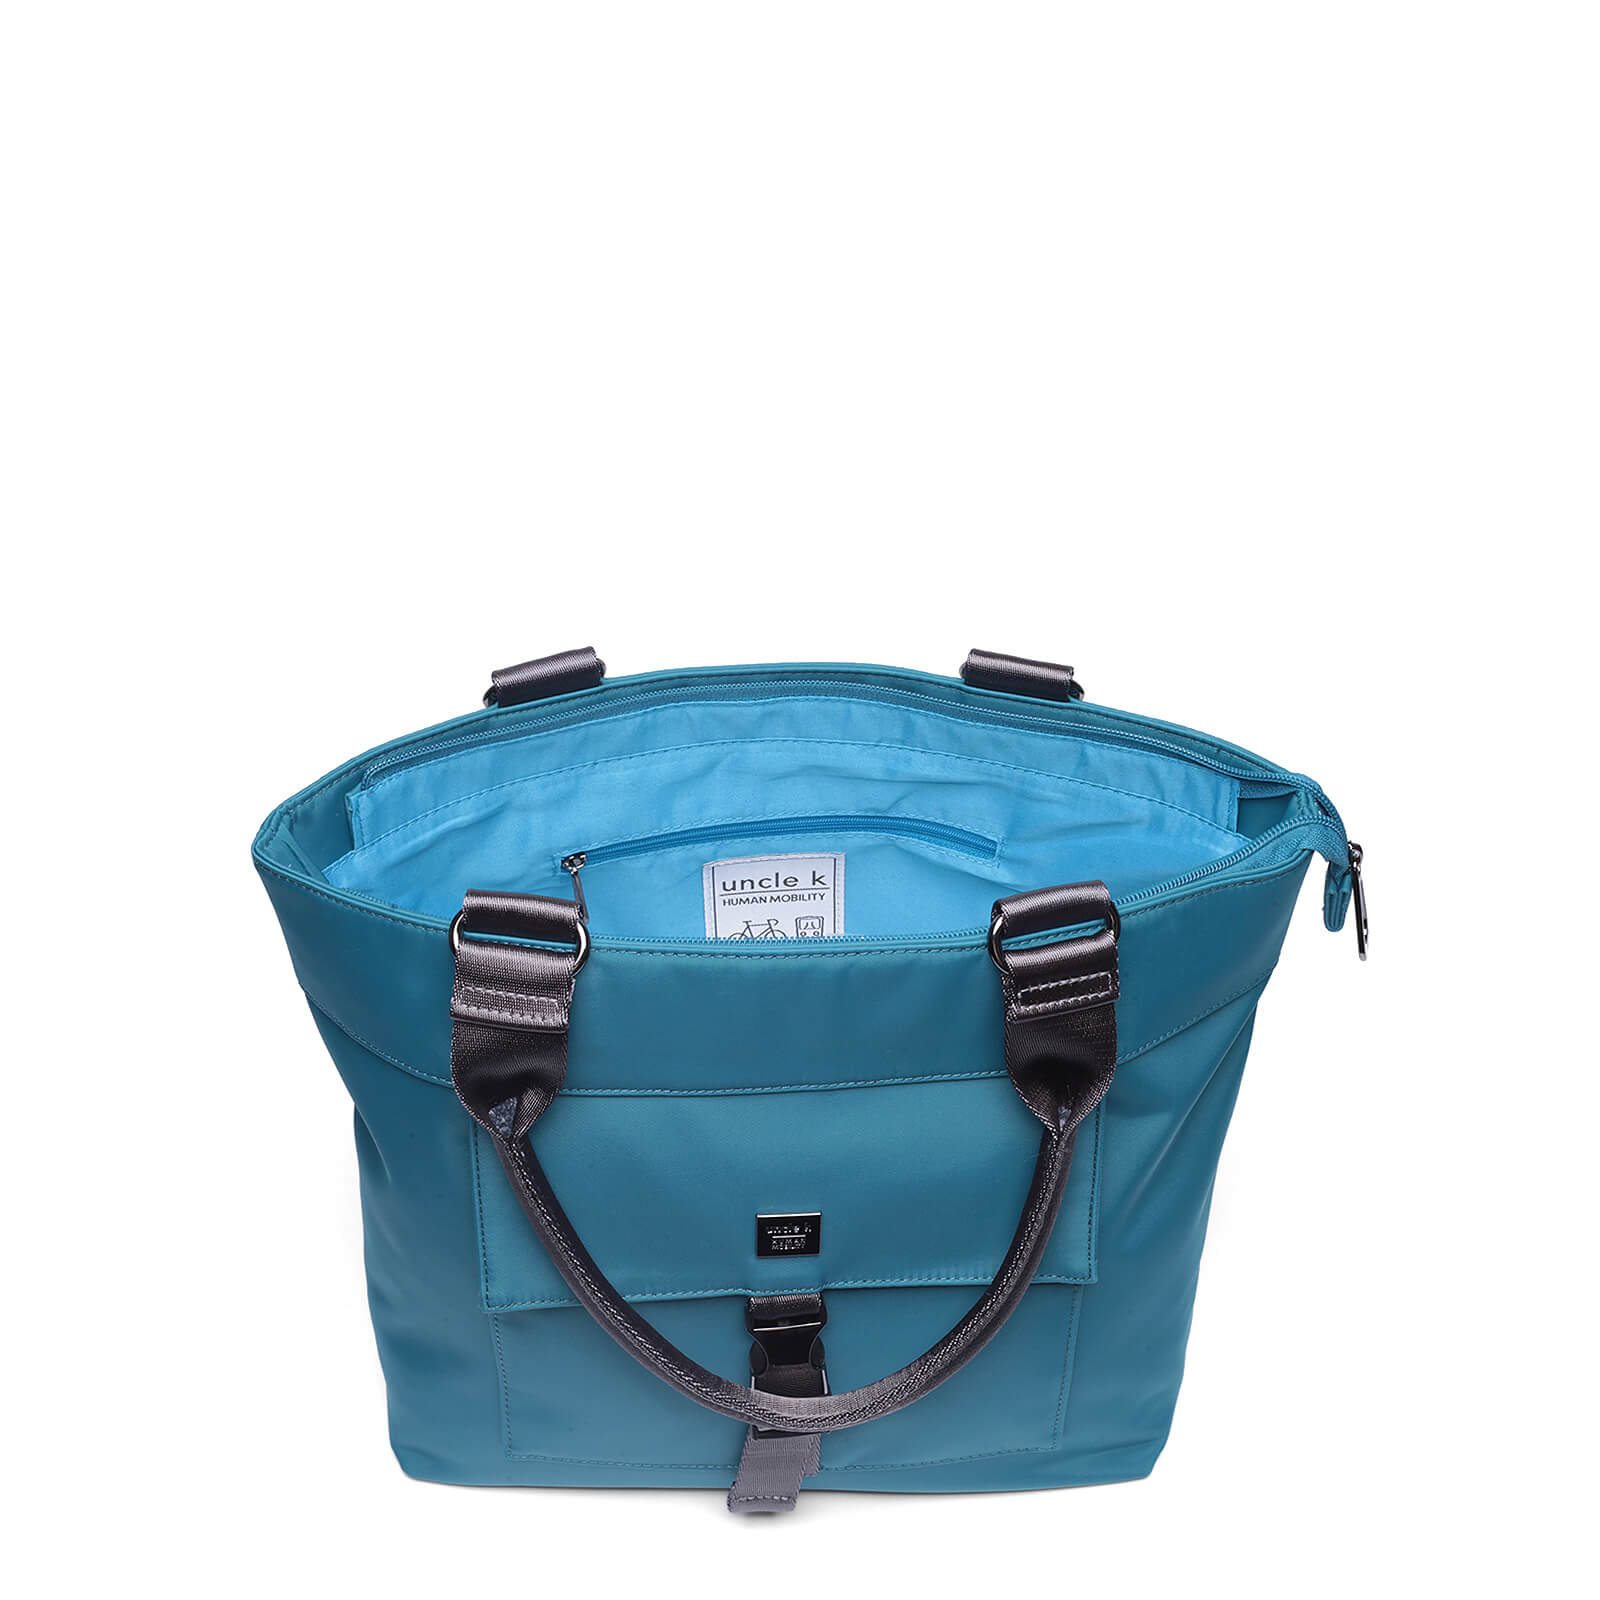 bolsa-shopping-bag-nylon-bnt-61039-unclek-azul-5